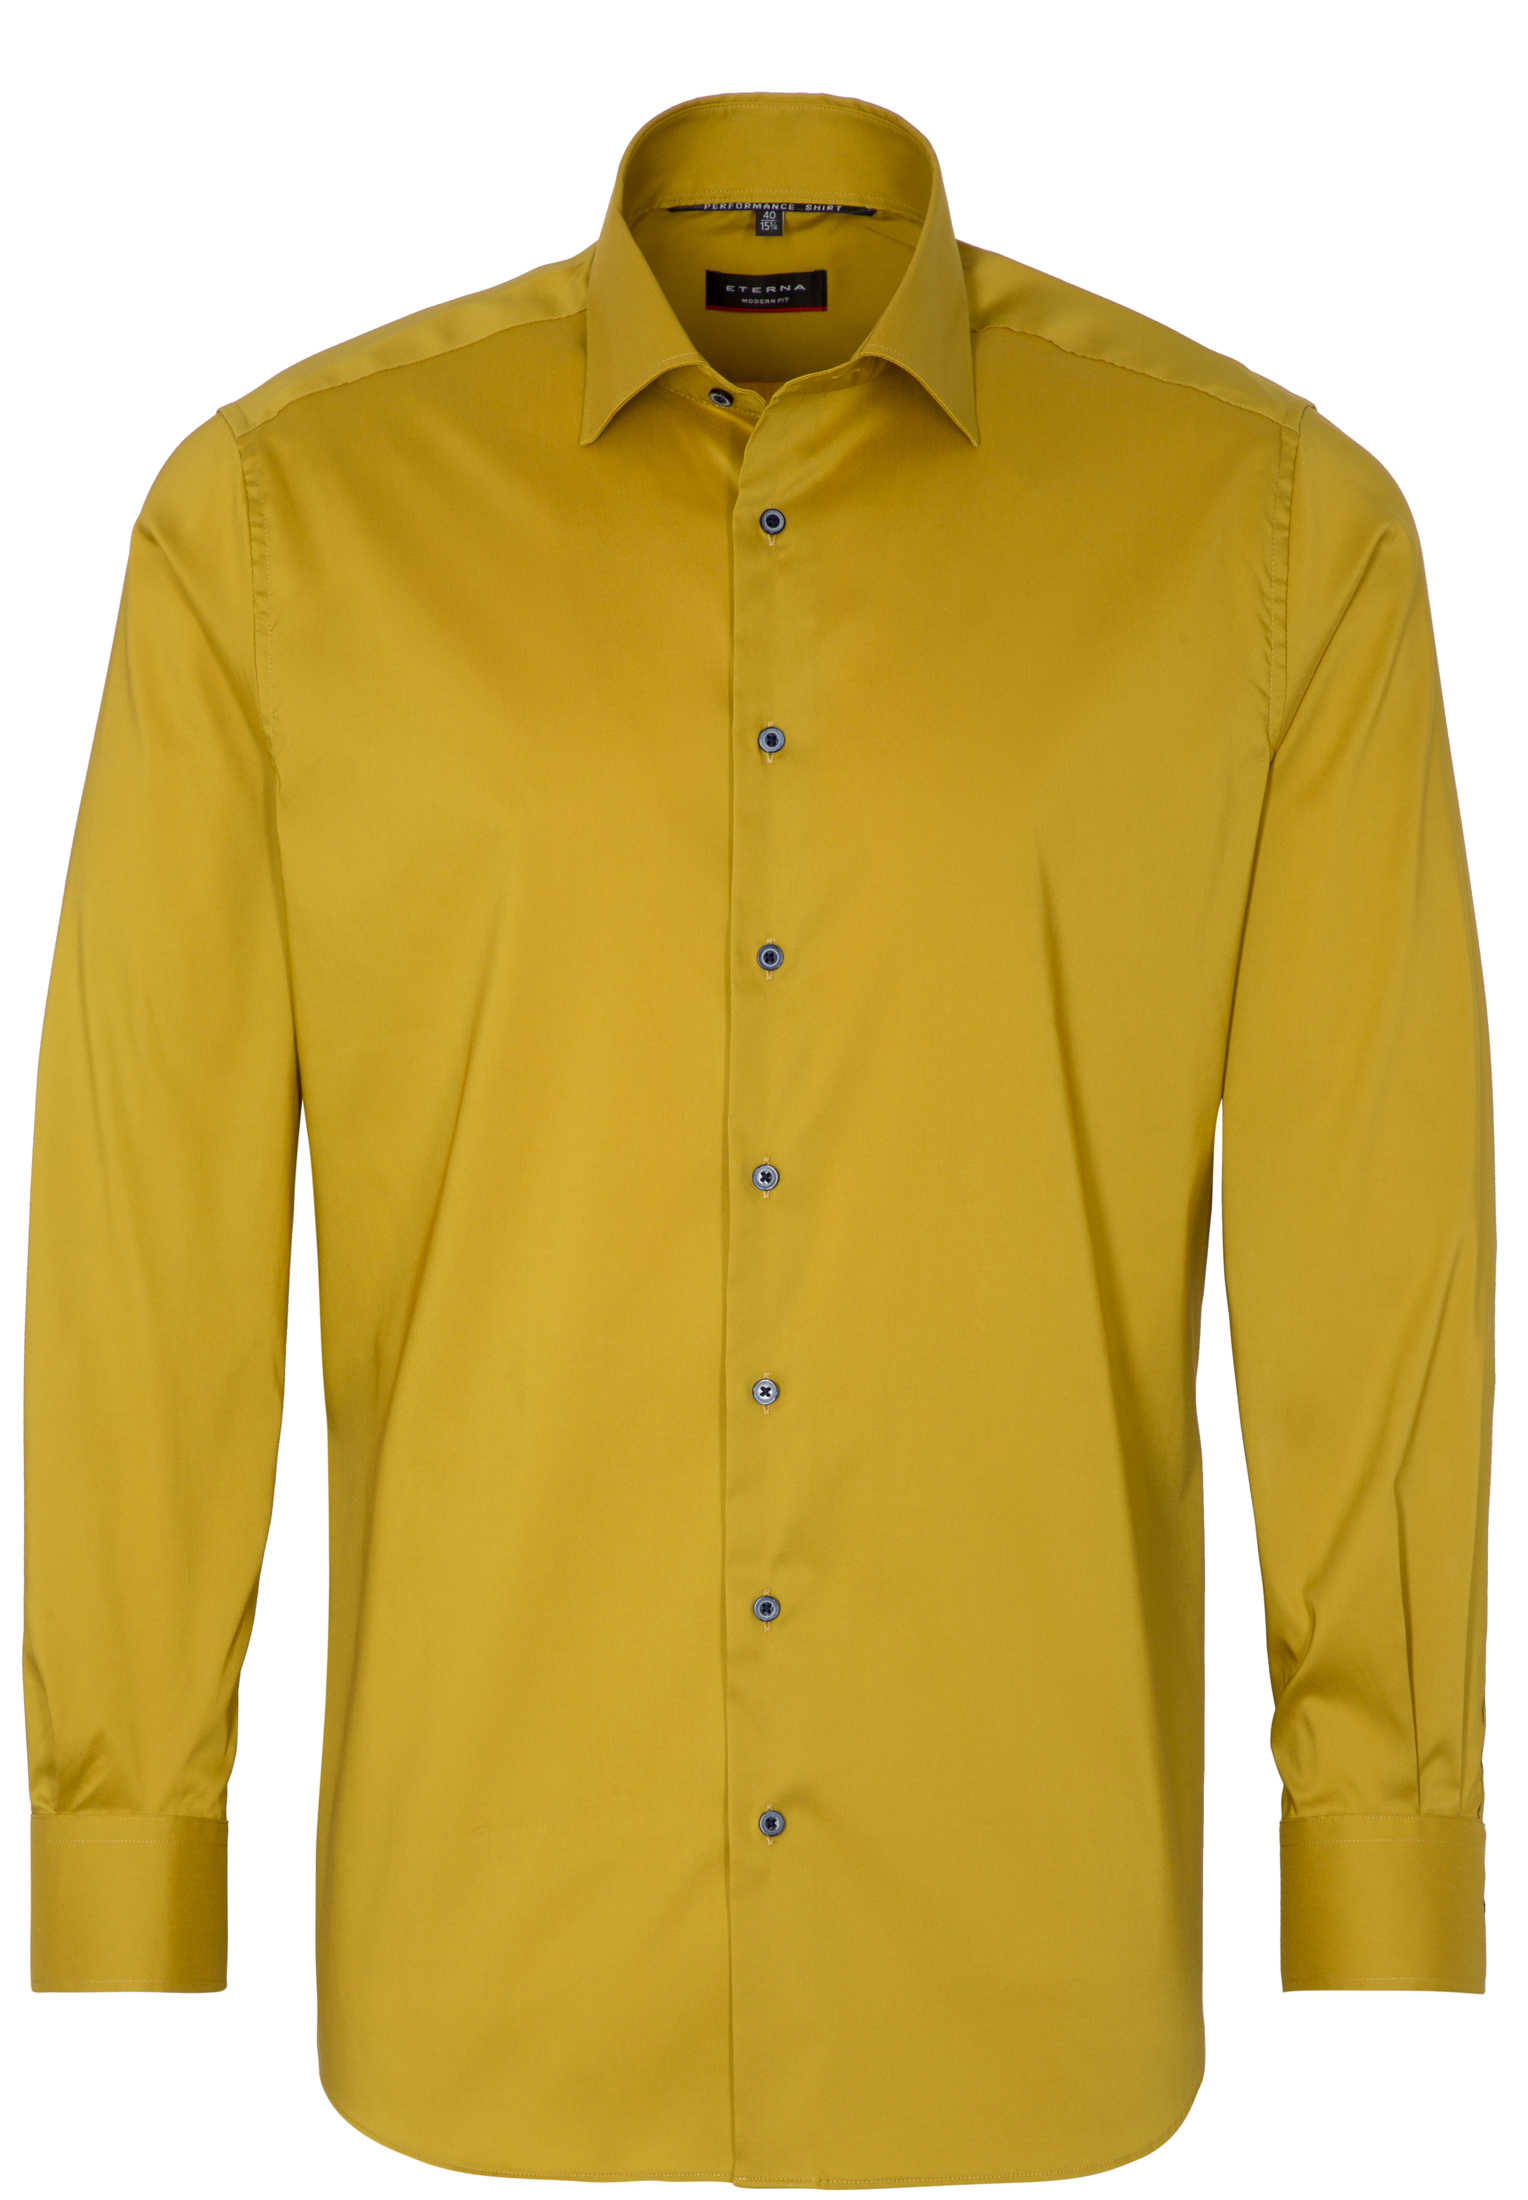 MODERN FIT Performance Shirt in yellow plain